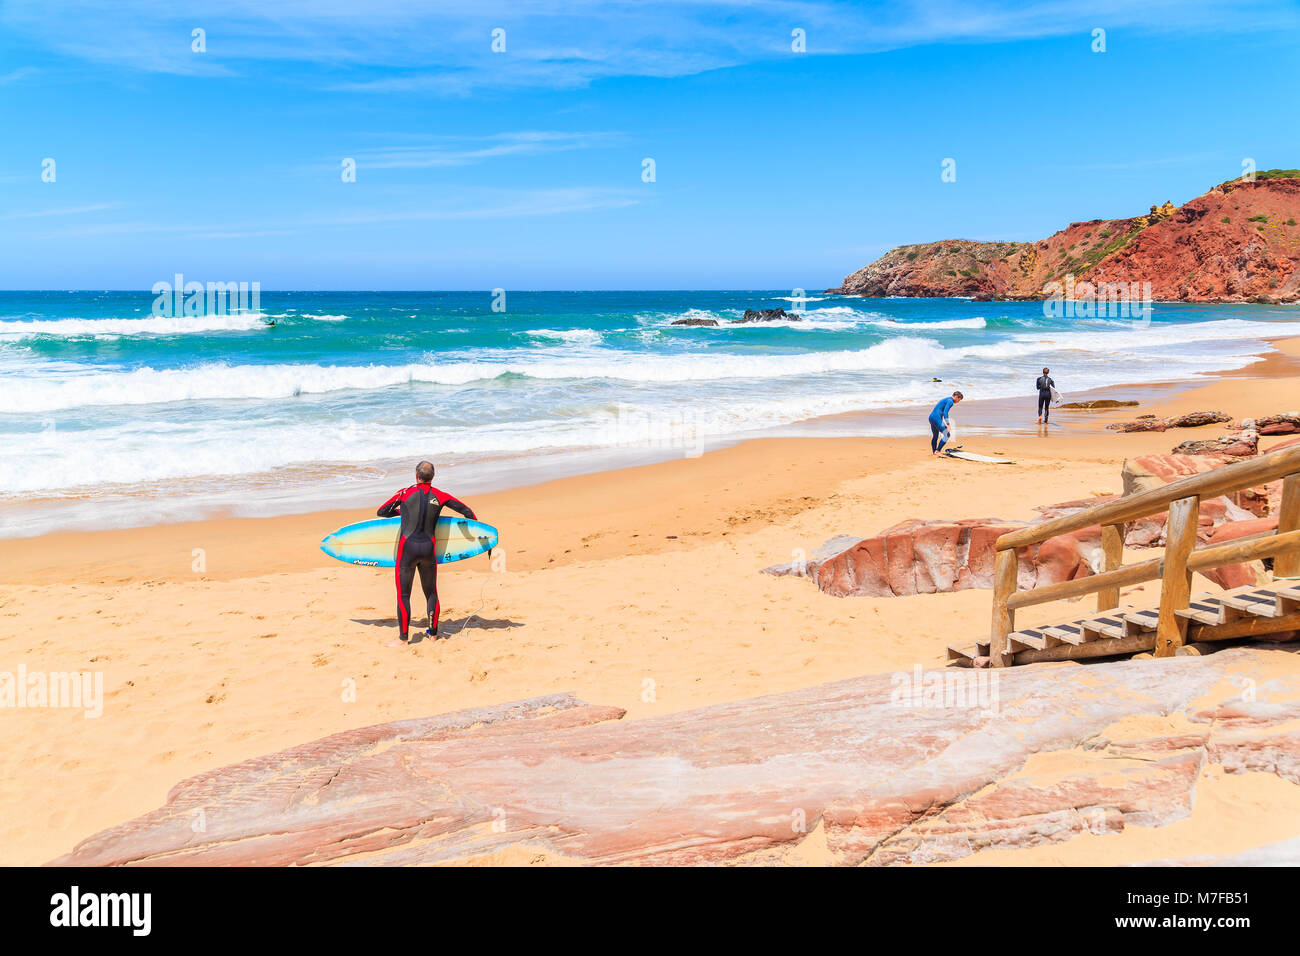 PRAIA DO AMADO BEACH, PORTUGAL - MAY 15, 2015: People surfing on Praia do Amado beach with ocean waves hitting shore. Algarve region is popular holida Stock Photo